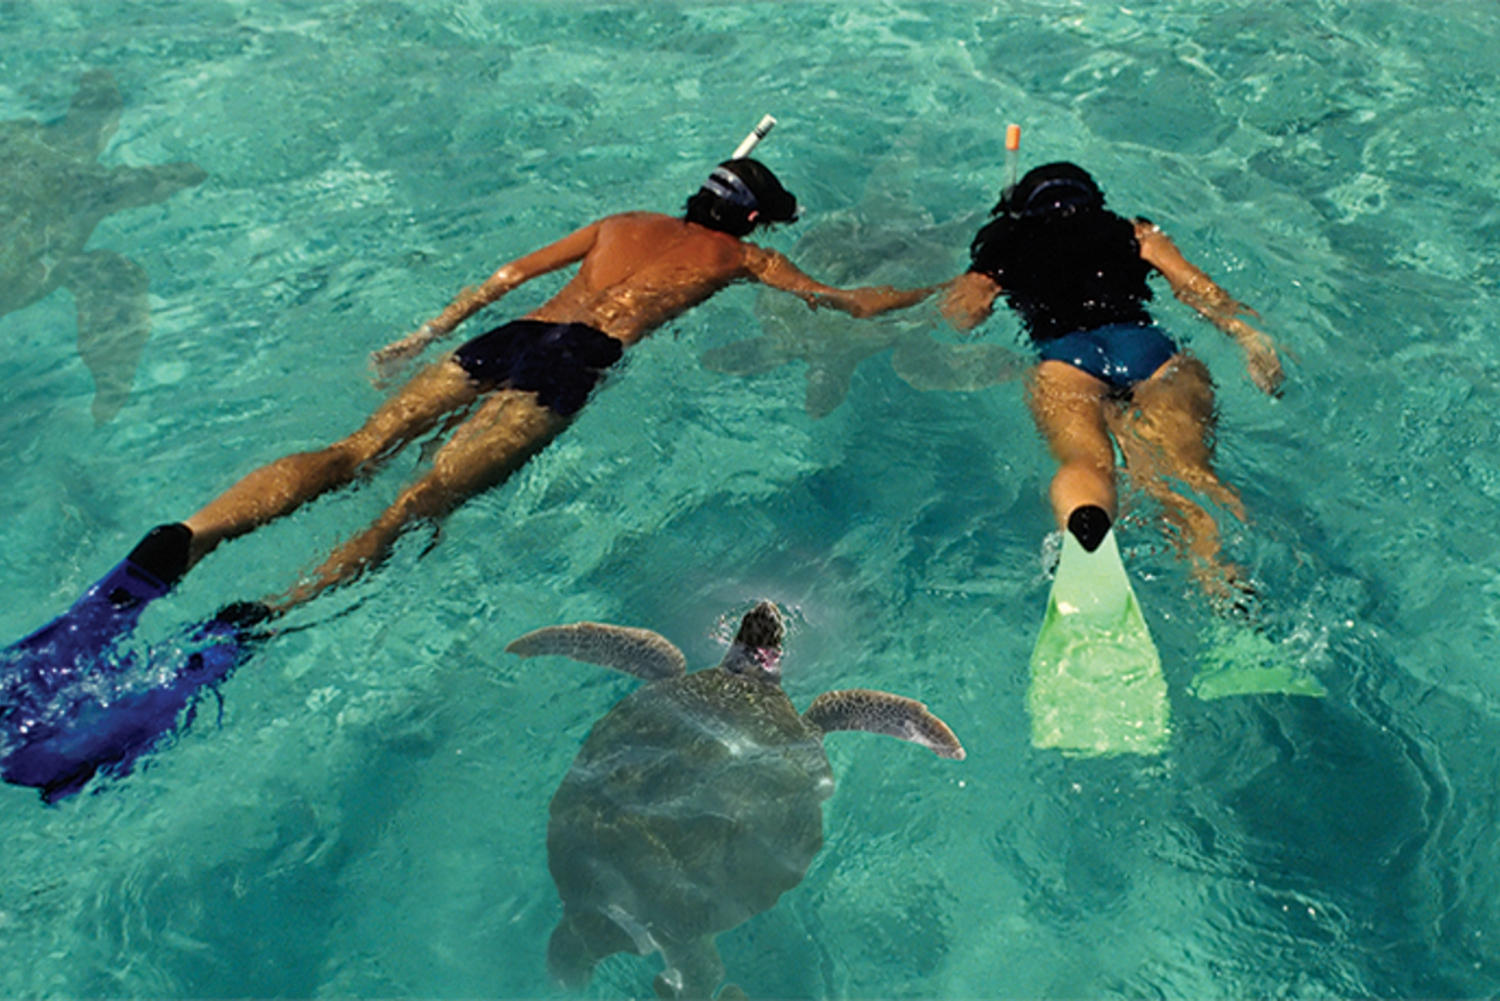 lanai snorkeling tours from maui